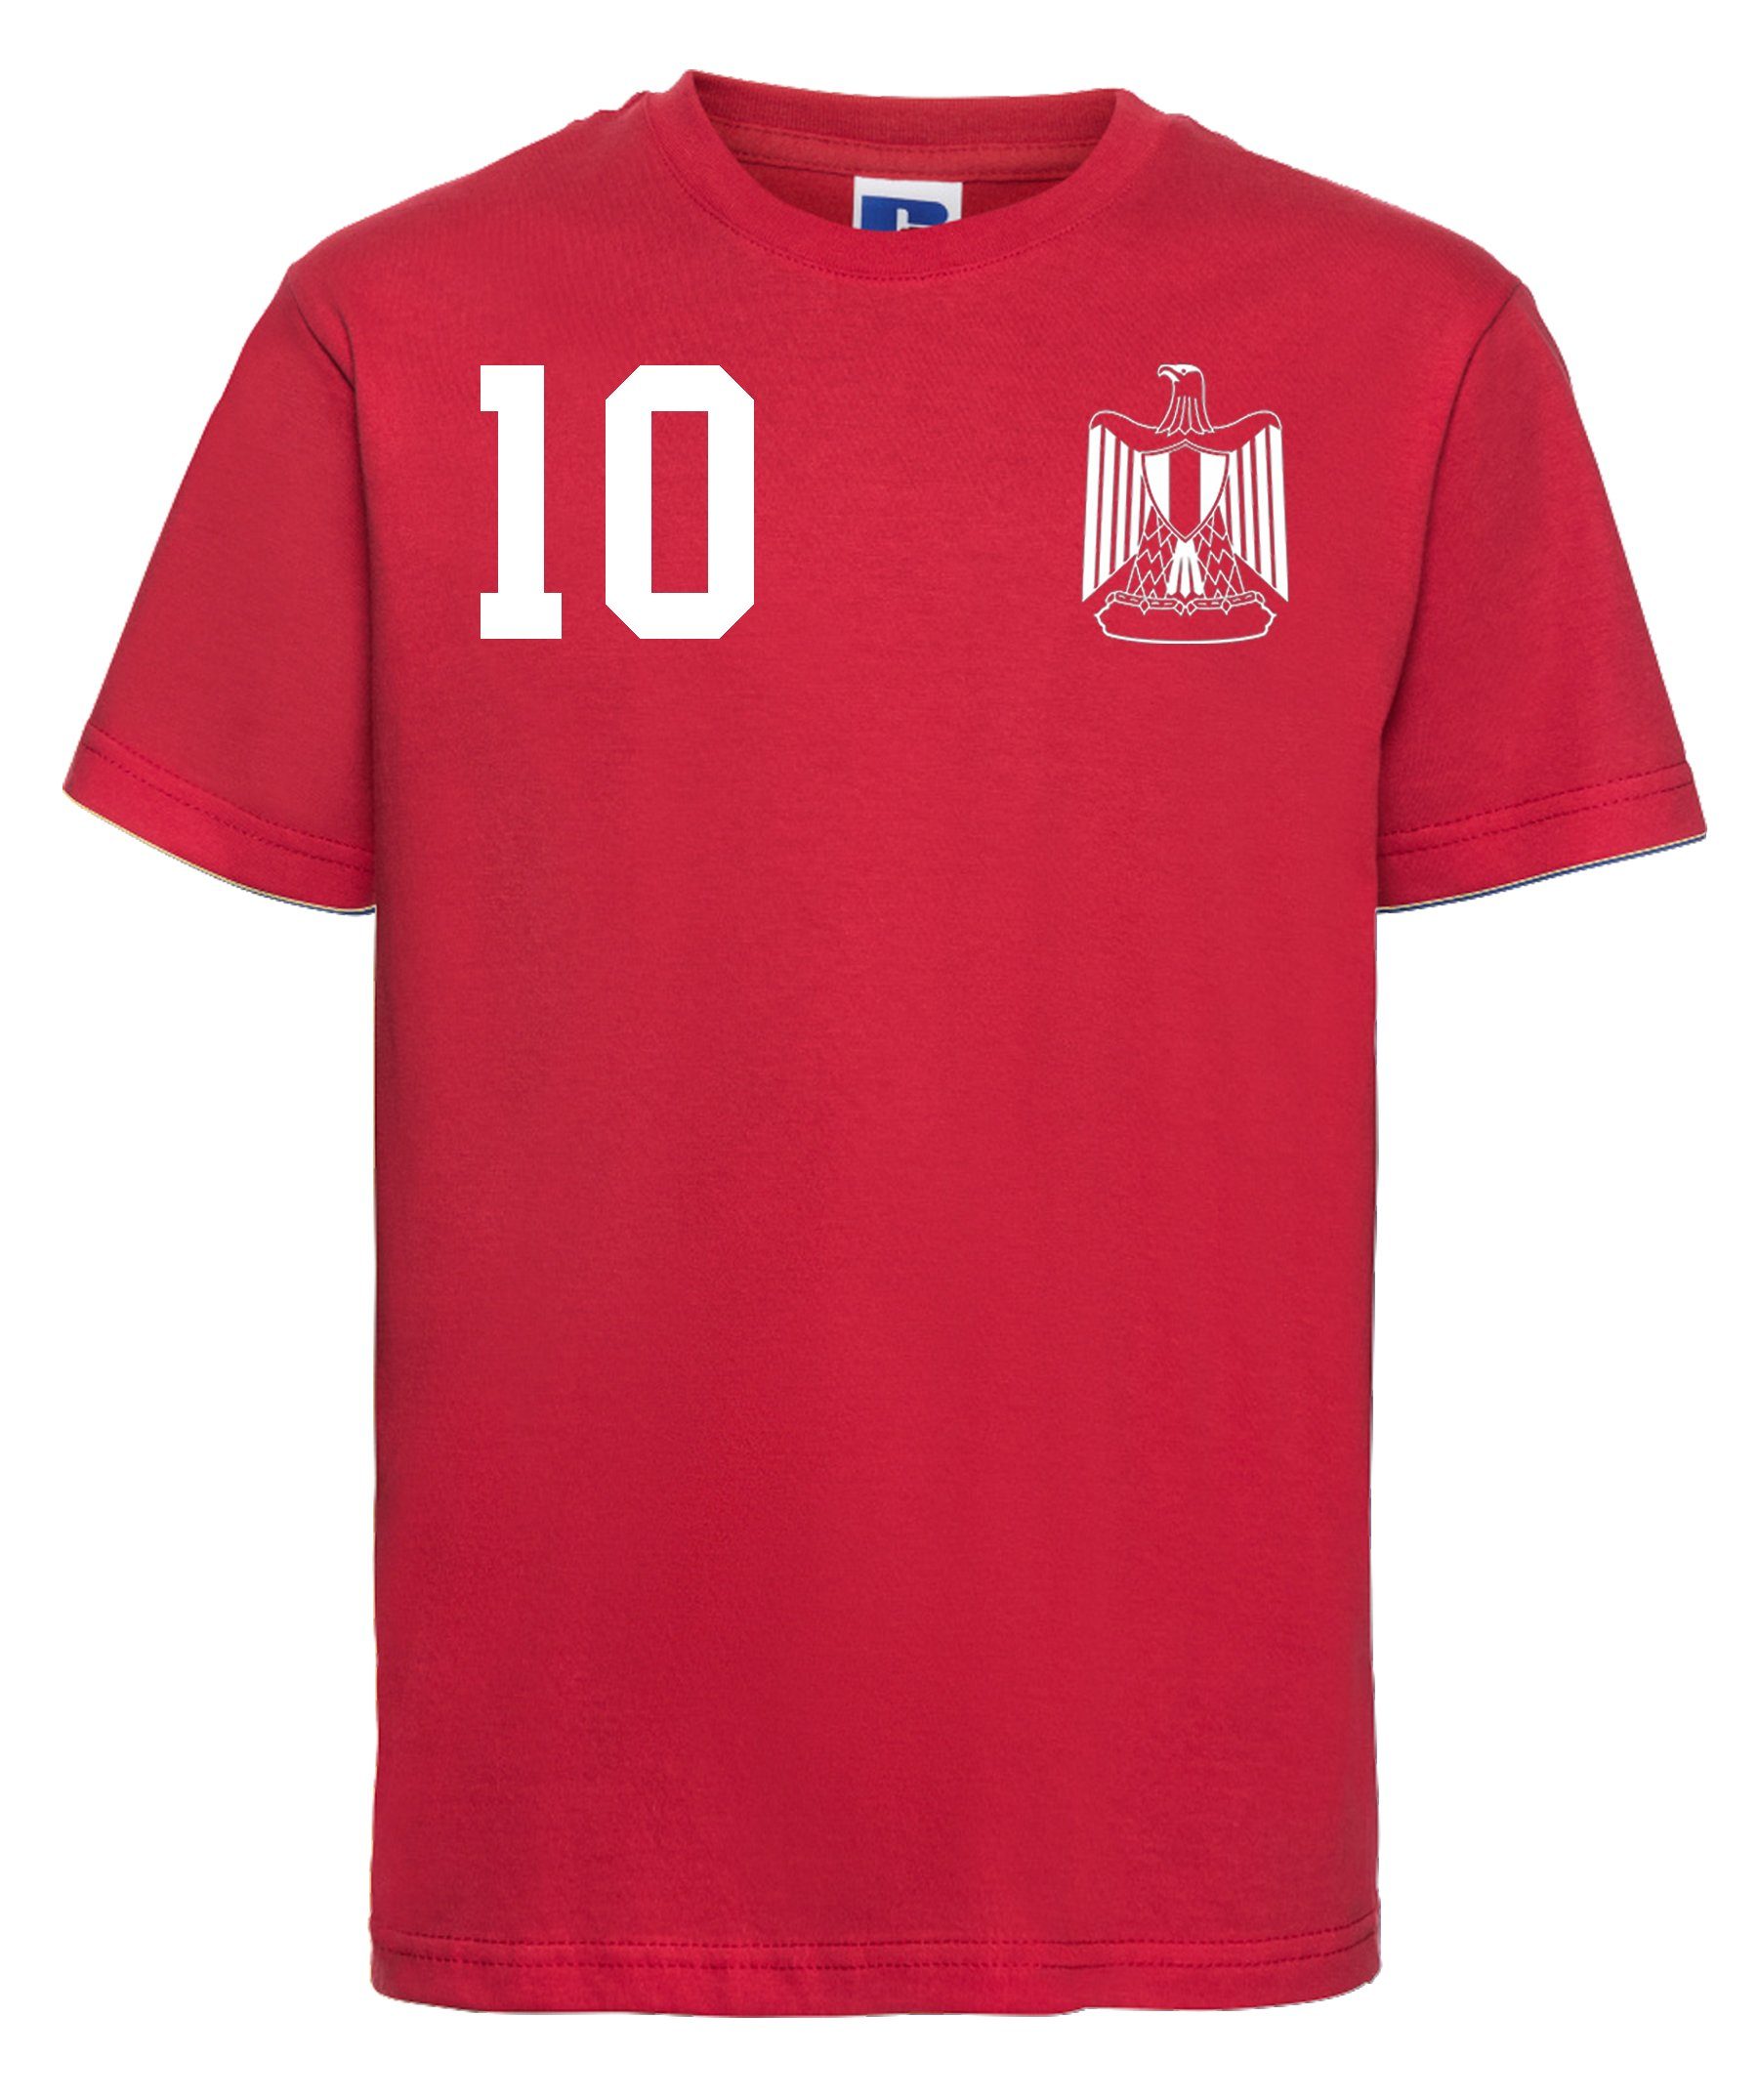 im Designz Kinder T-Shirt Motiv Fußball Youth Trikot mit T-Shirt Ägypten Look trendigem